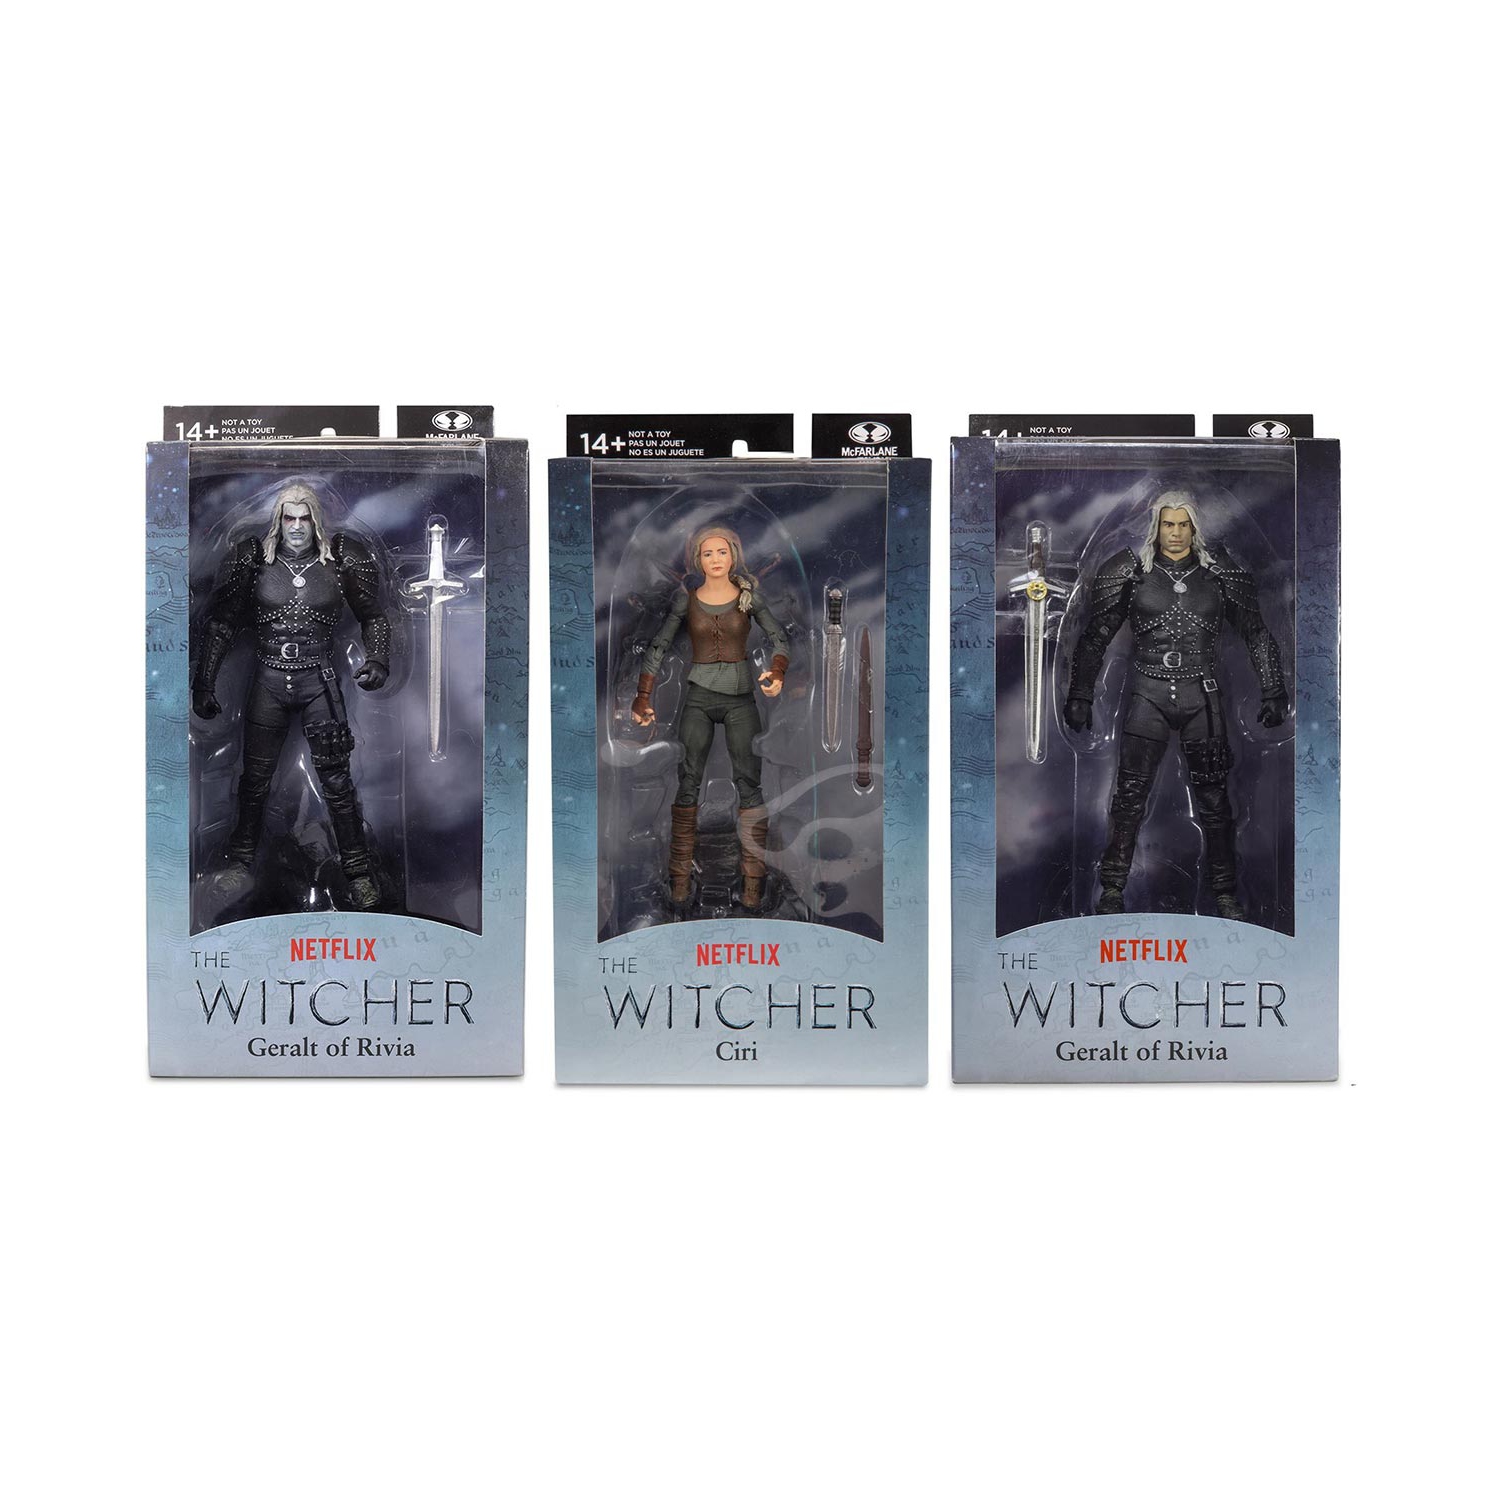 The Witchet Netflix 7 Inch Action Figure Wave 2 - Set of 3 (Geralt - Witcher - Ciri)